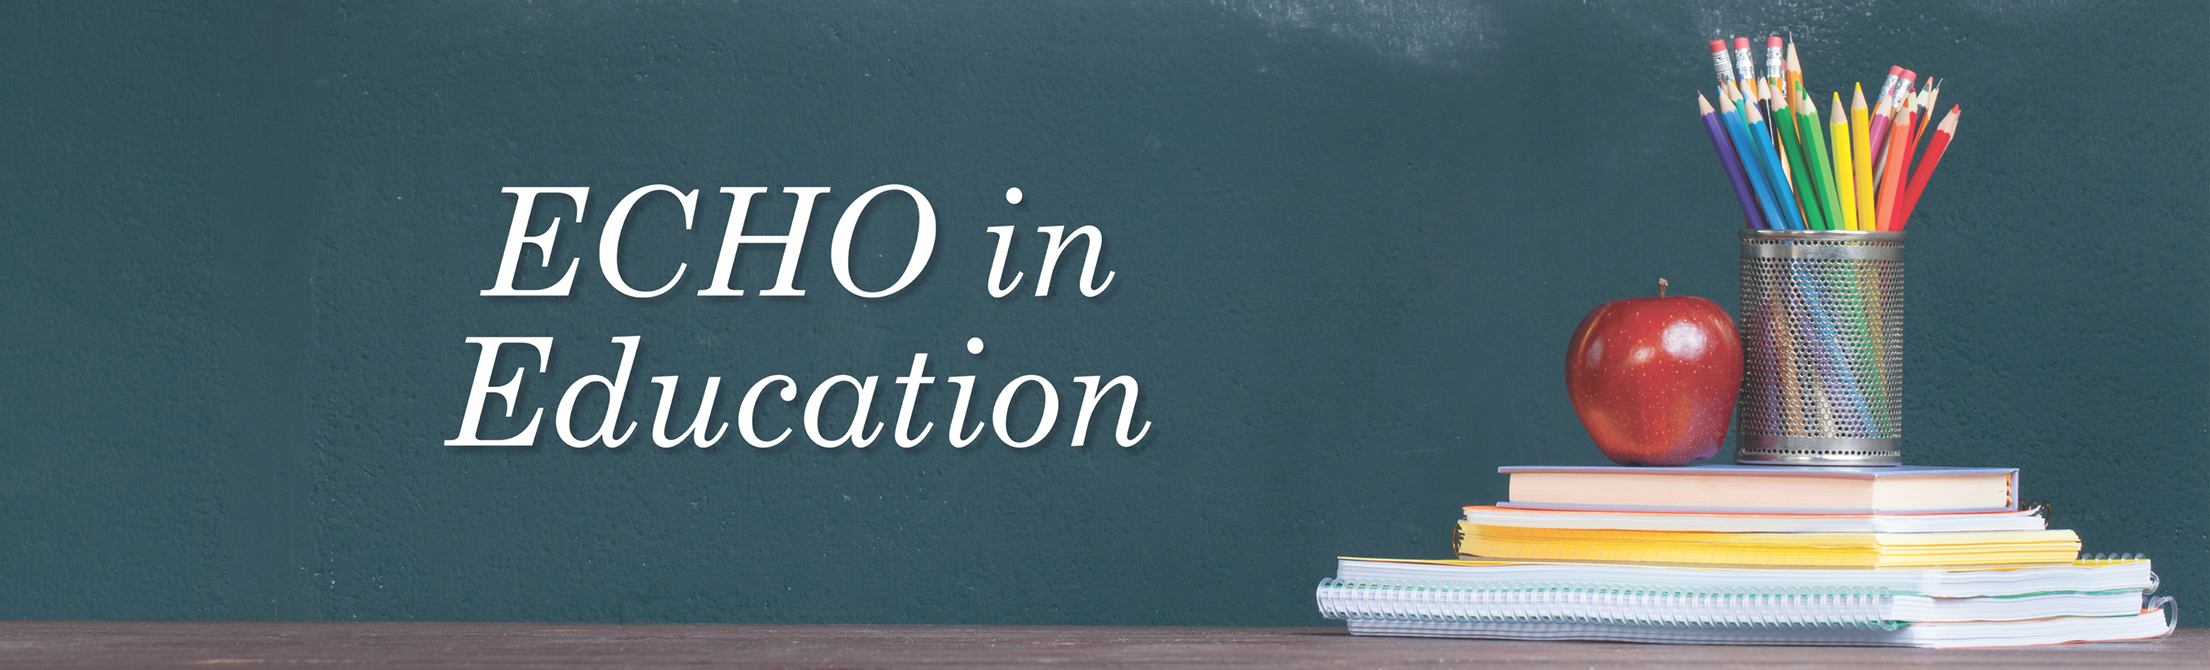 chalkboard, books, pencils, and apple, "ECHO in Education"